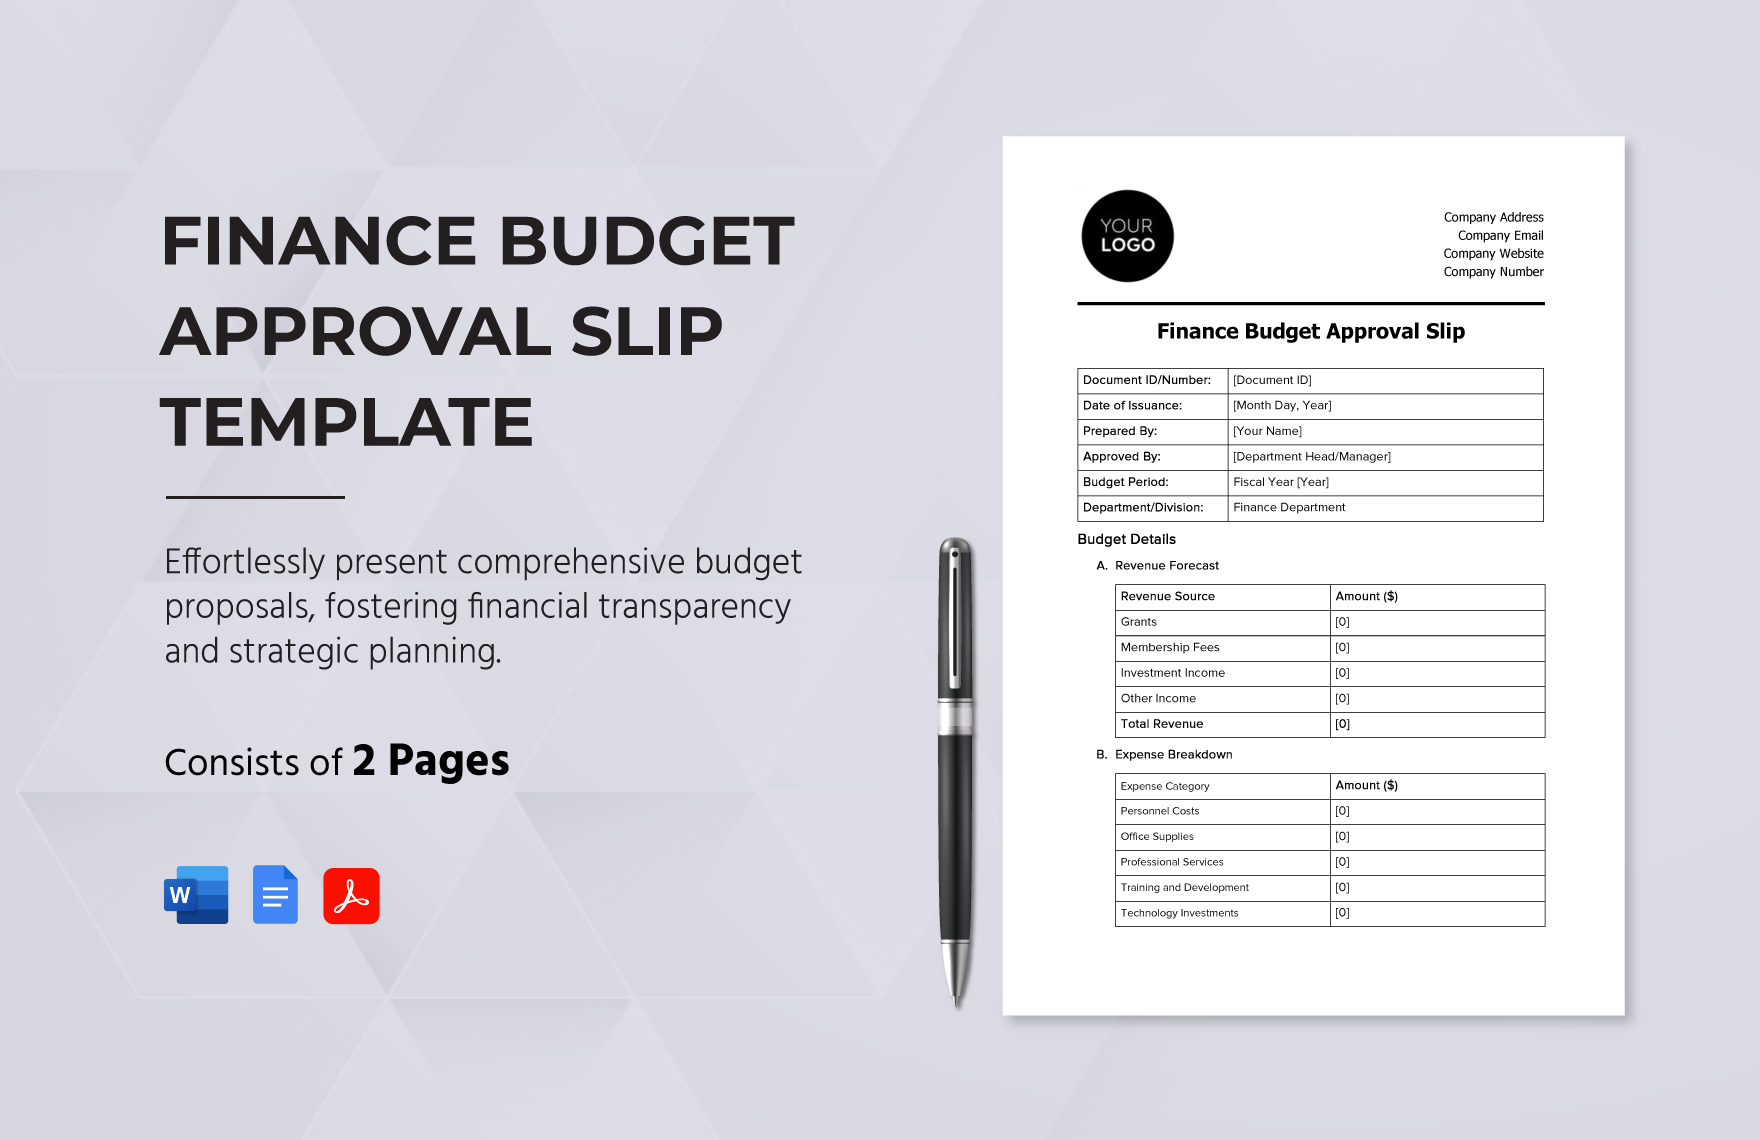 Finance Budget Approval Slip Template